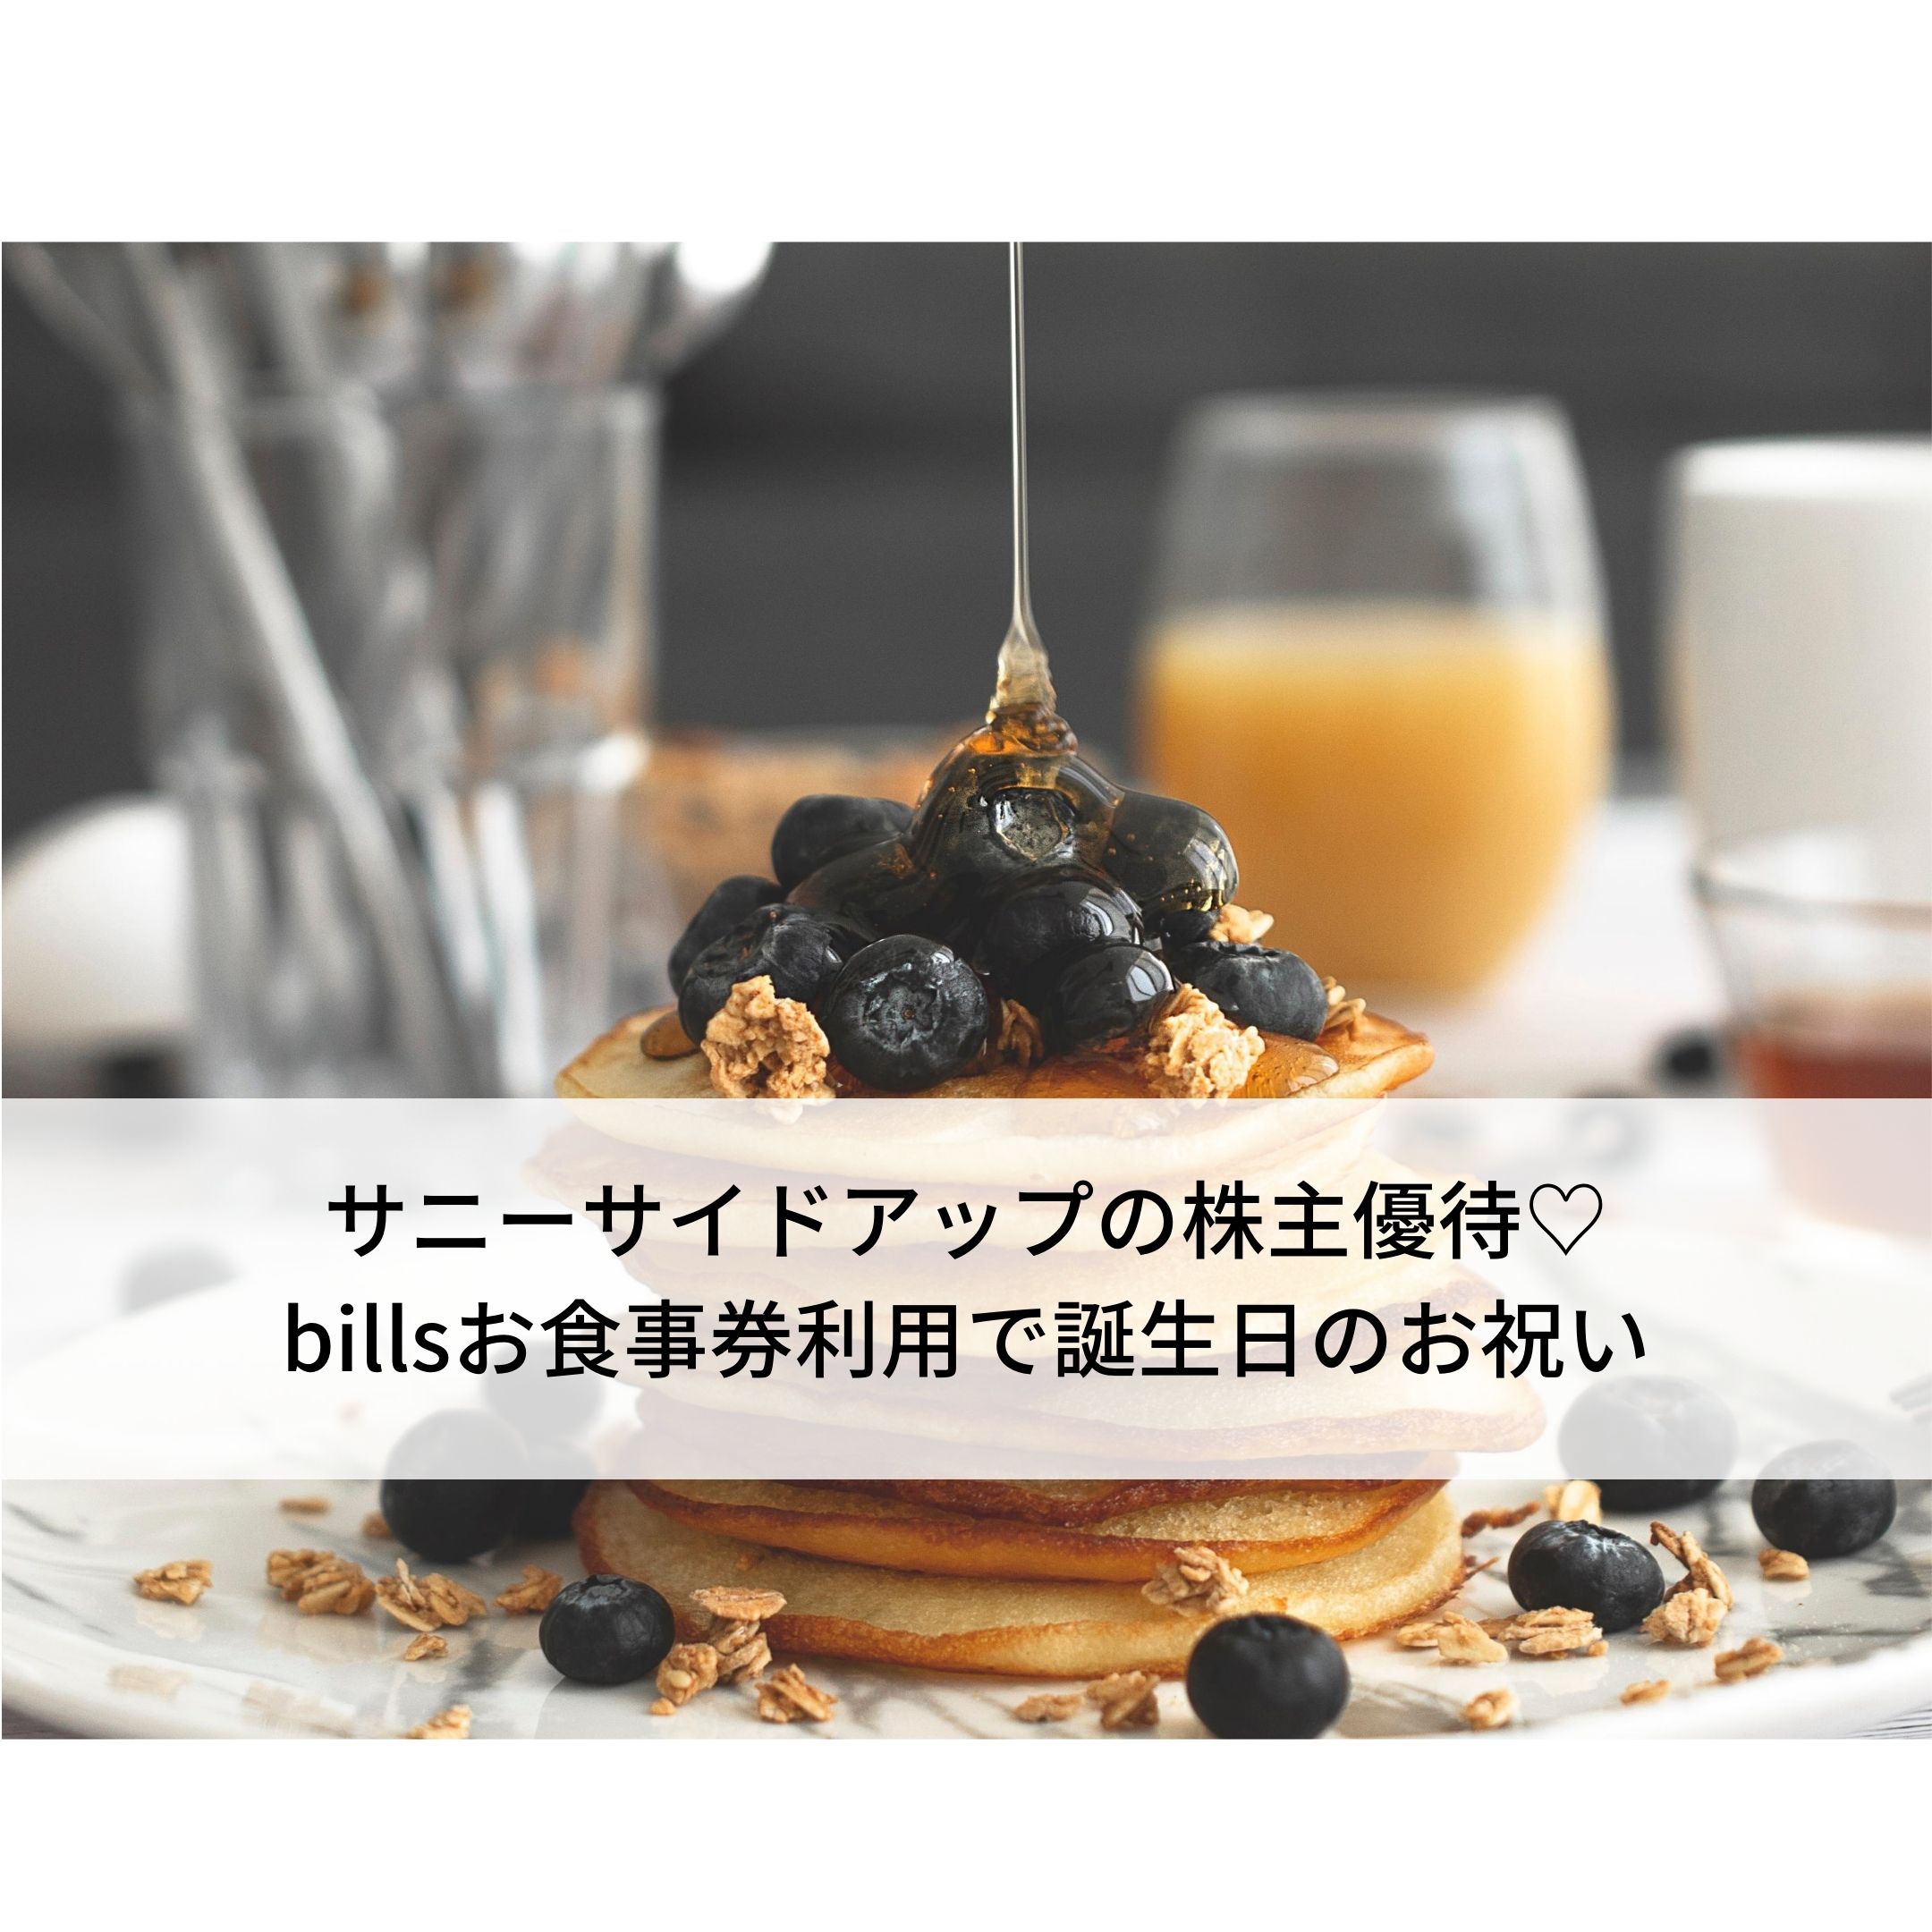 bills サニーサイドアップ株主優待 5枚 pcmsafety.com.br